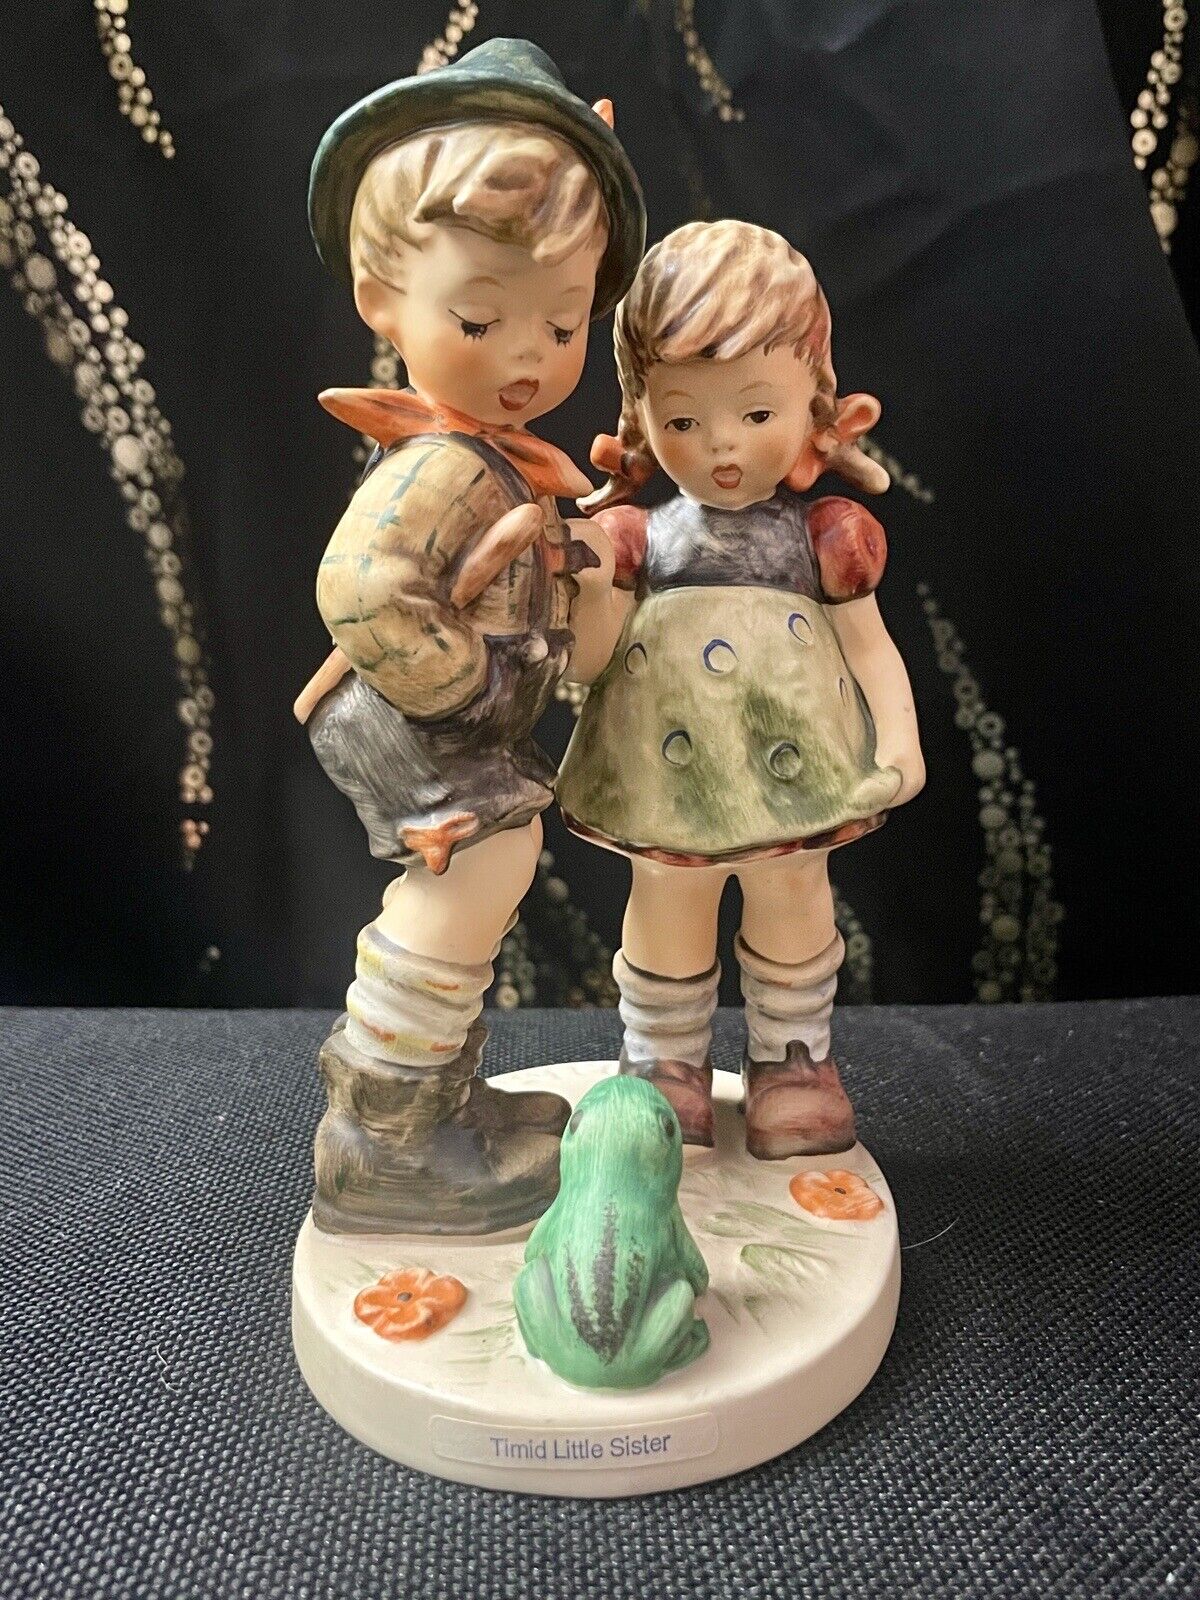 Hummel Figurine ‘TIMID LITTLE SISTER’, Boy, Sister & Frog, TMK6, HUM 394, 7” VG+